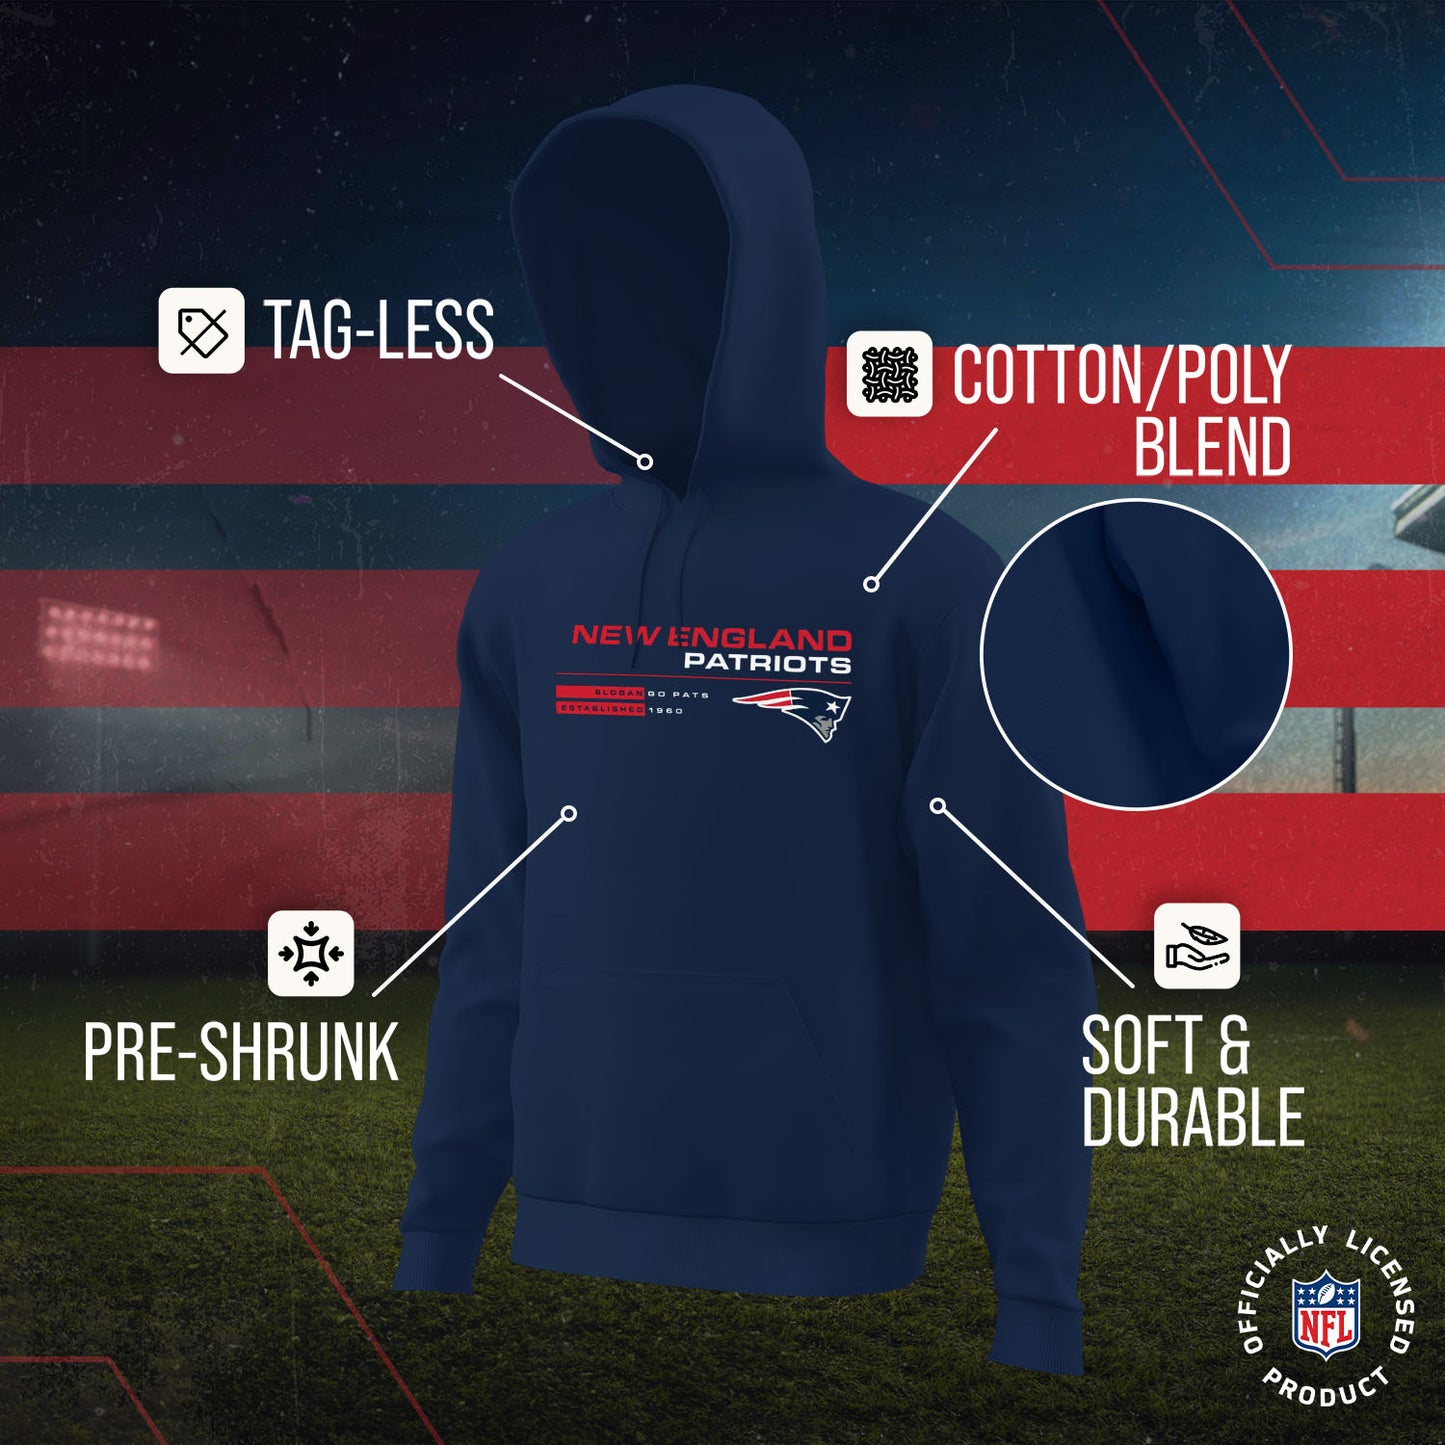 New England Patriots Adult NFL Speed Stat Sheet Fleece Hooded Sweatshirt - Navy